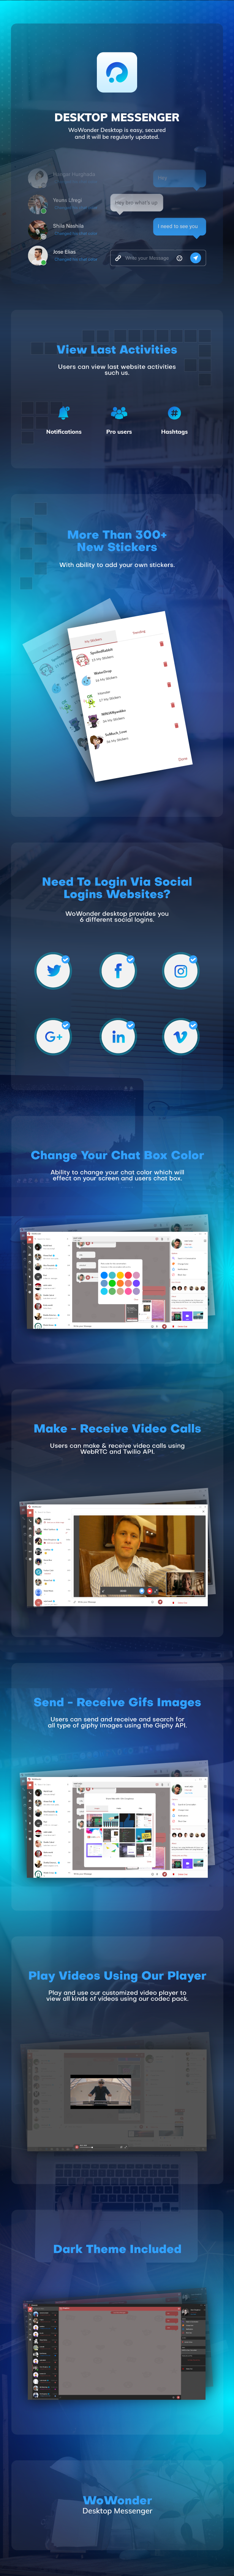 WoWonder Desktop - A Windows Messenger For WoWonder Social Script - 3